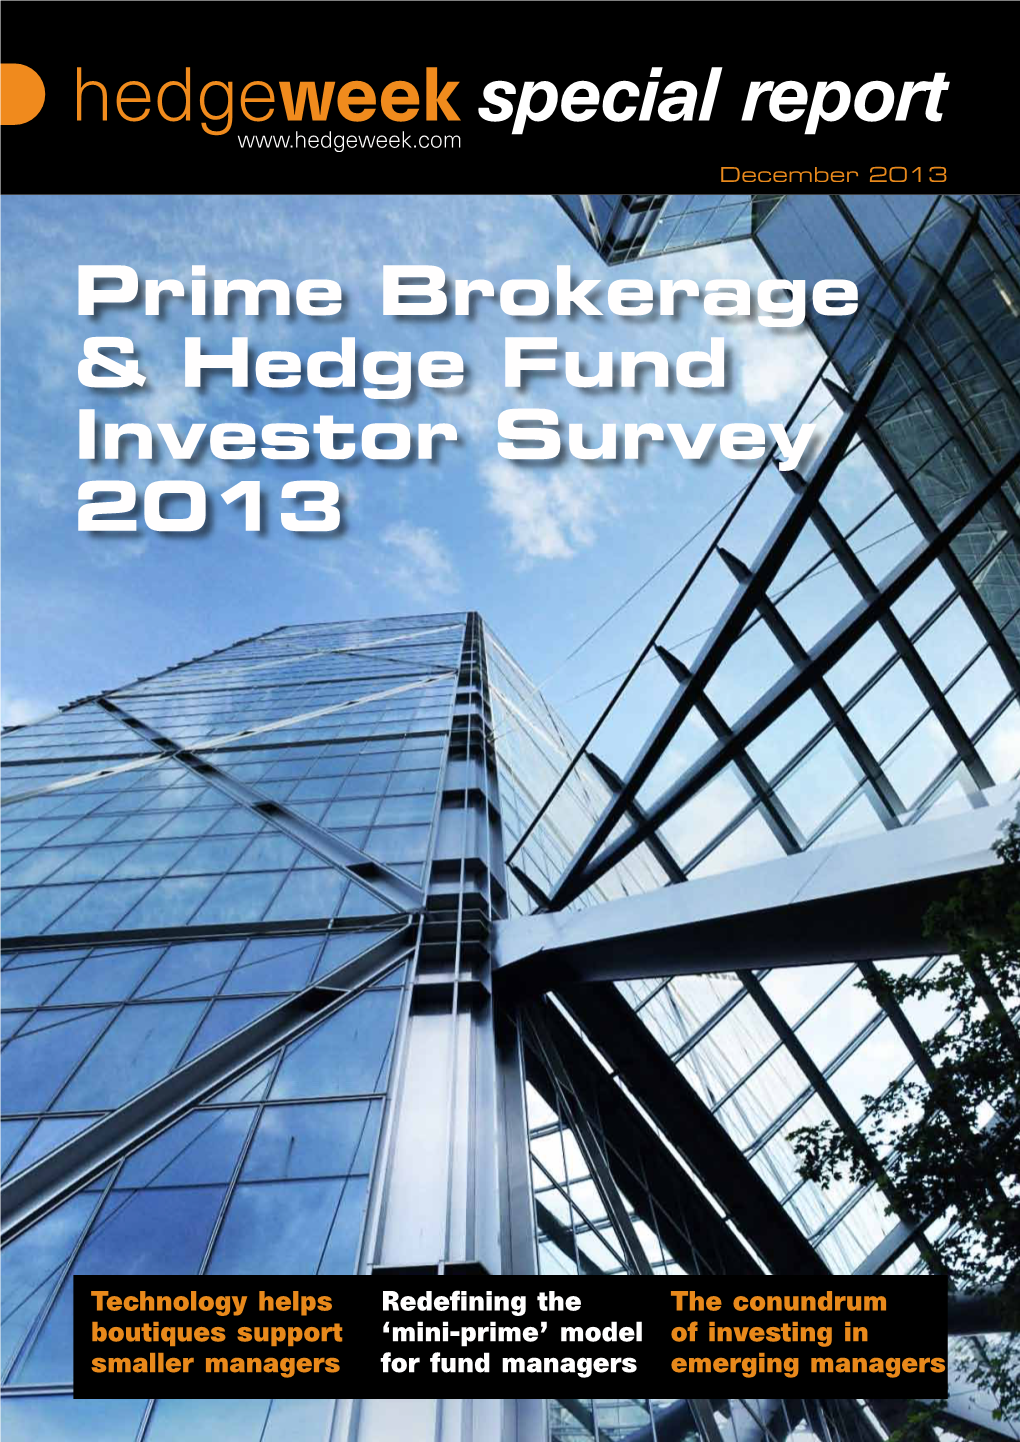 Prime Brokerage & Hedge Fund Investor Survey 2013